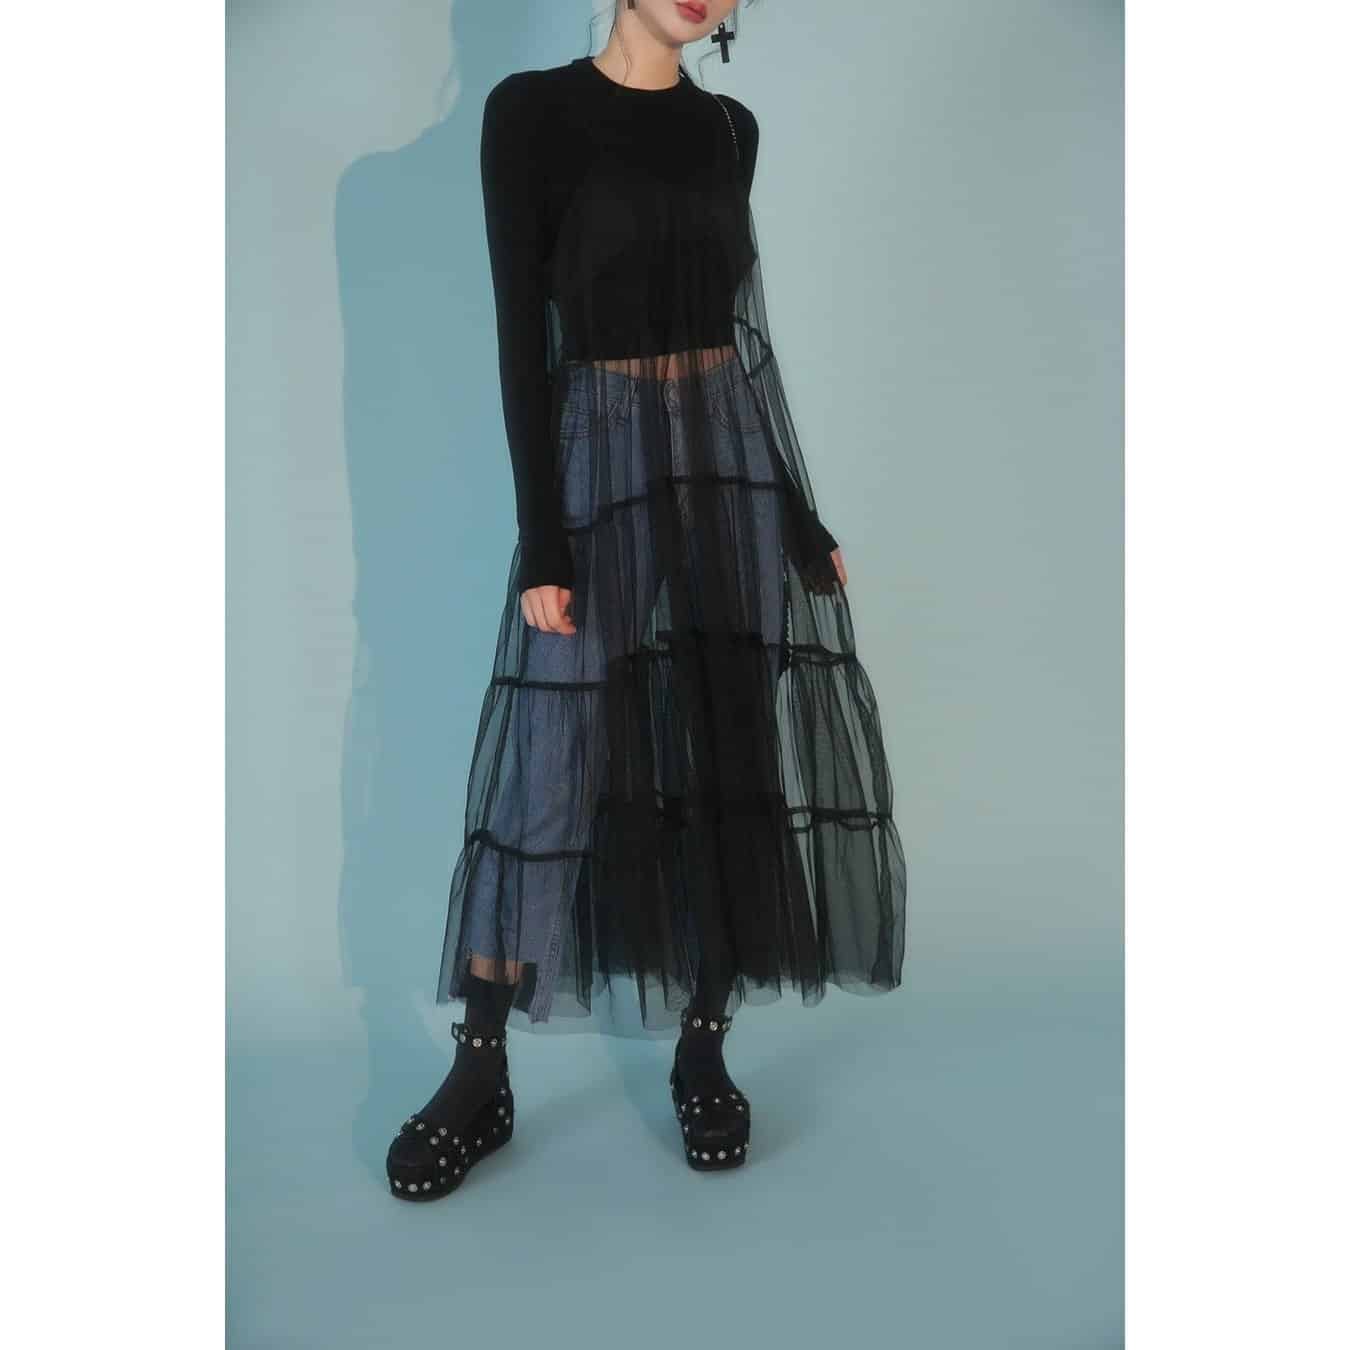 Ladies Vintage Mesh Skirt Long Dress - The Black Ravens